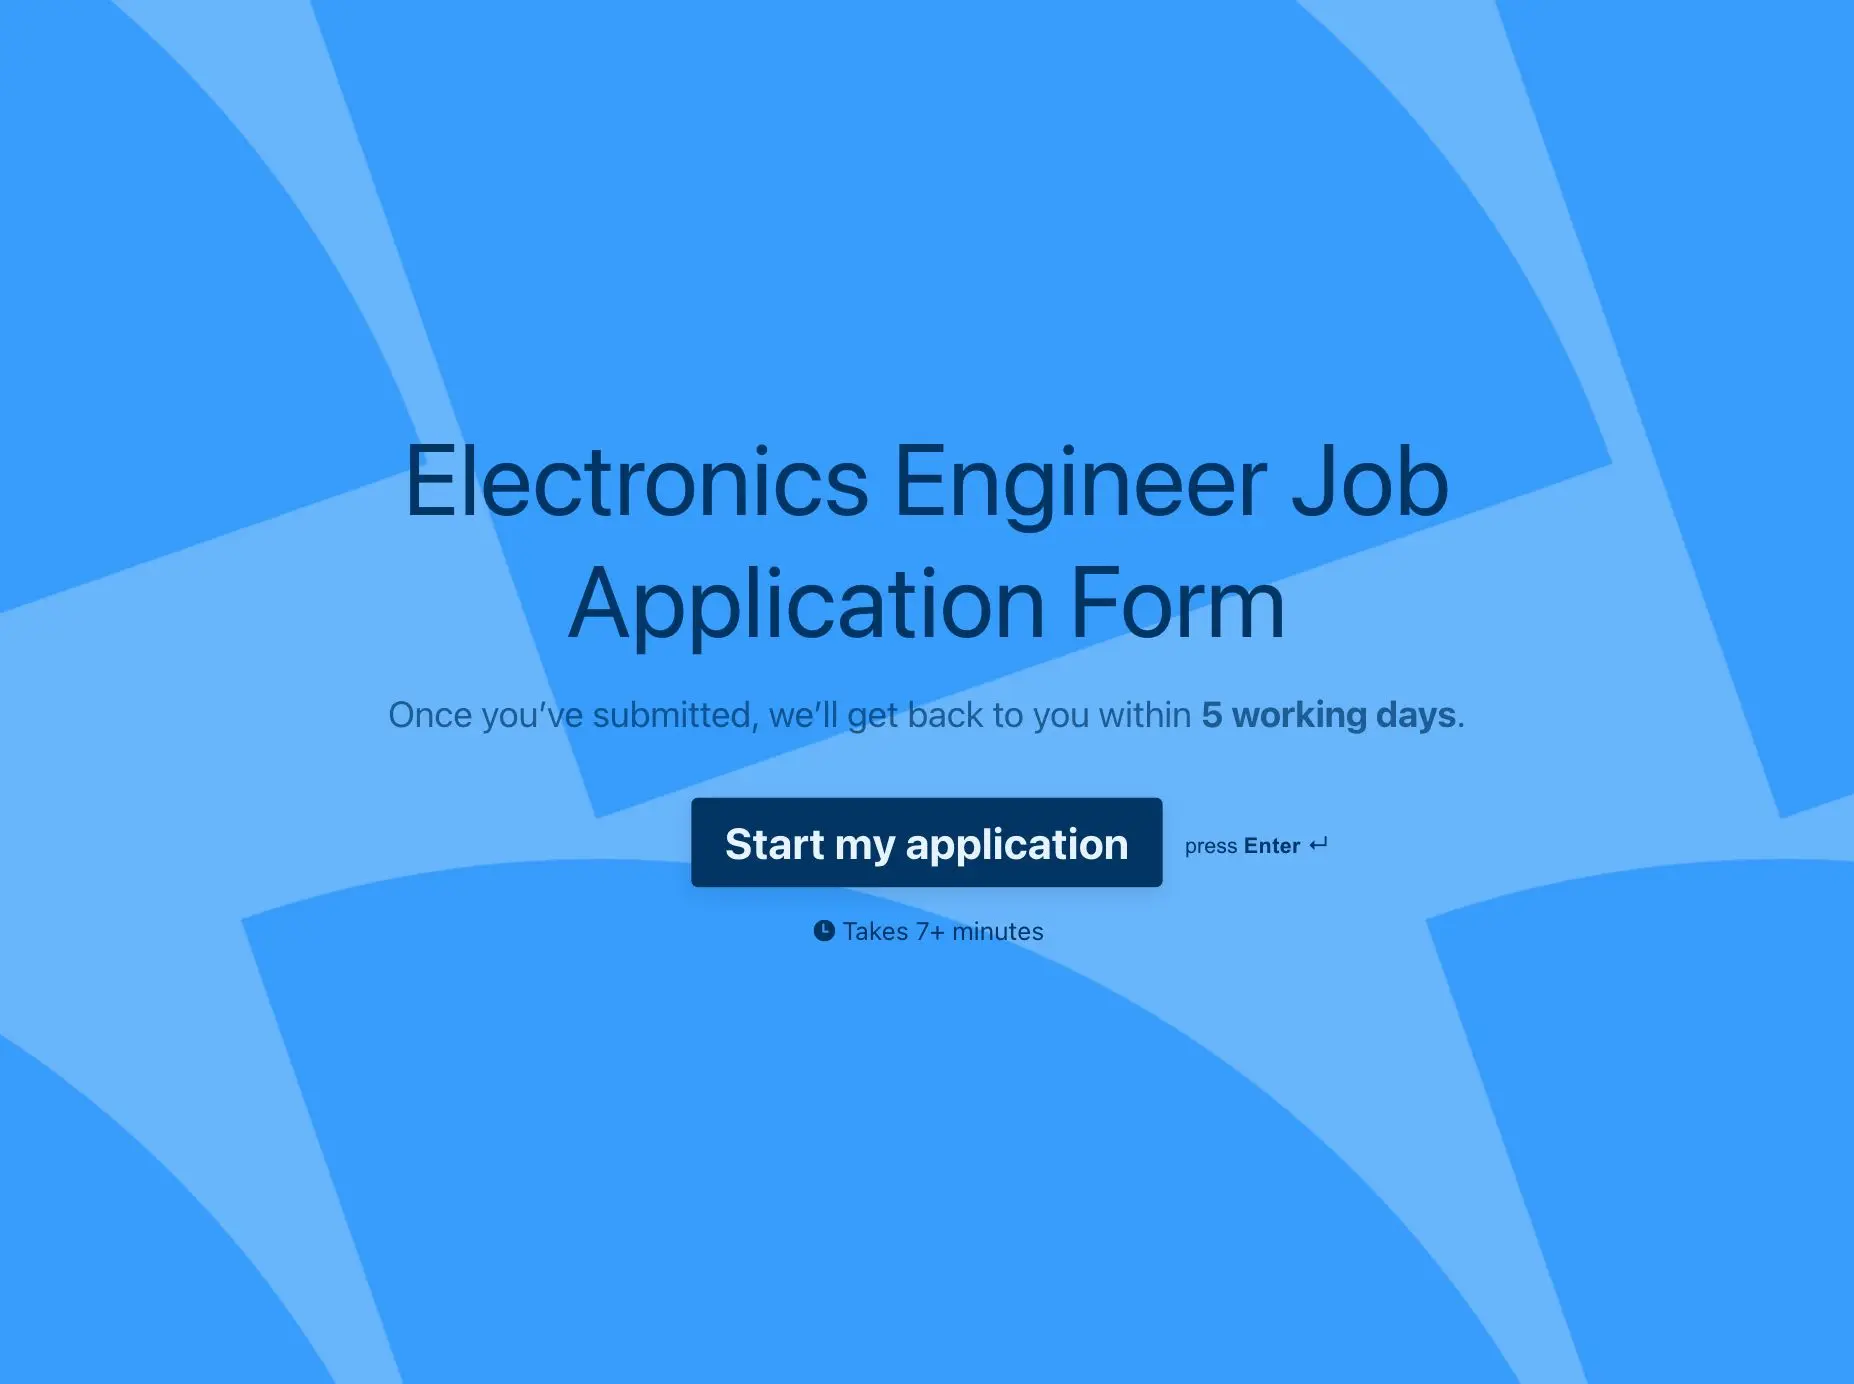 Electronics Engineer Job Application Form Template Hero